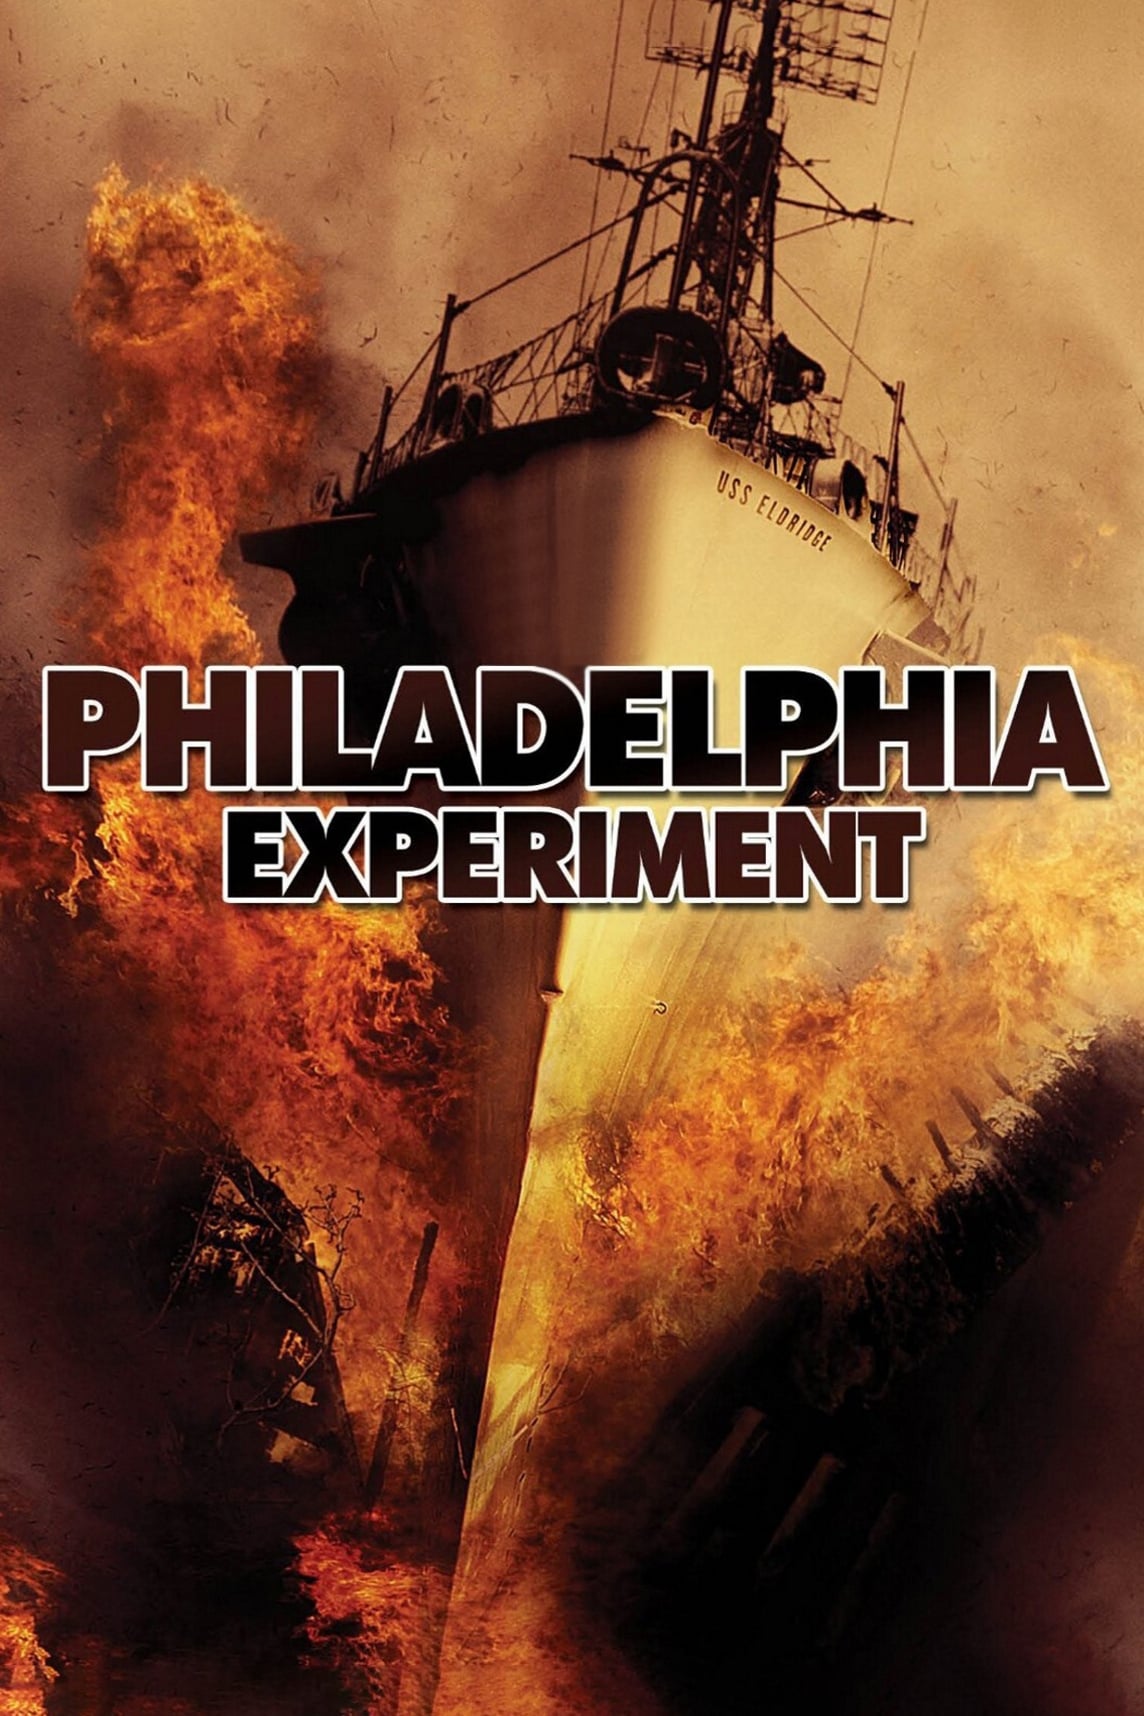 Con Tàu Bí Ẩn (The Philadelphia Experiment) [2012]